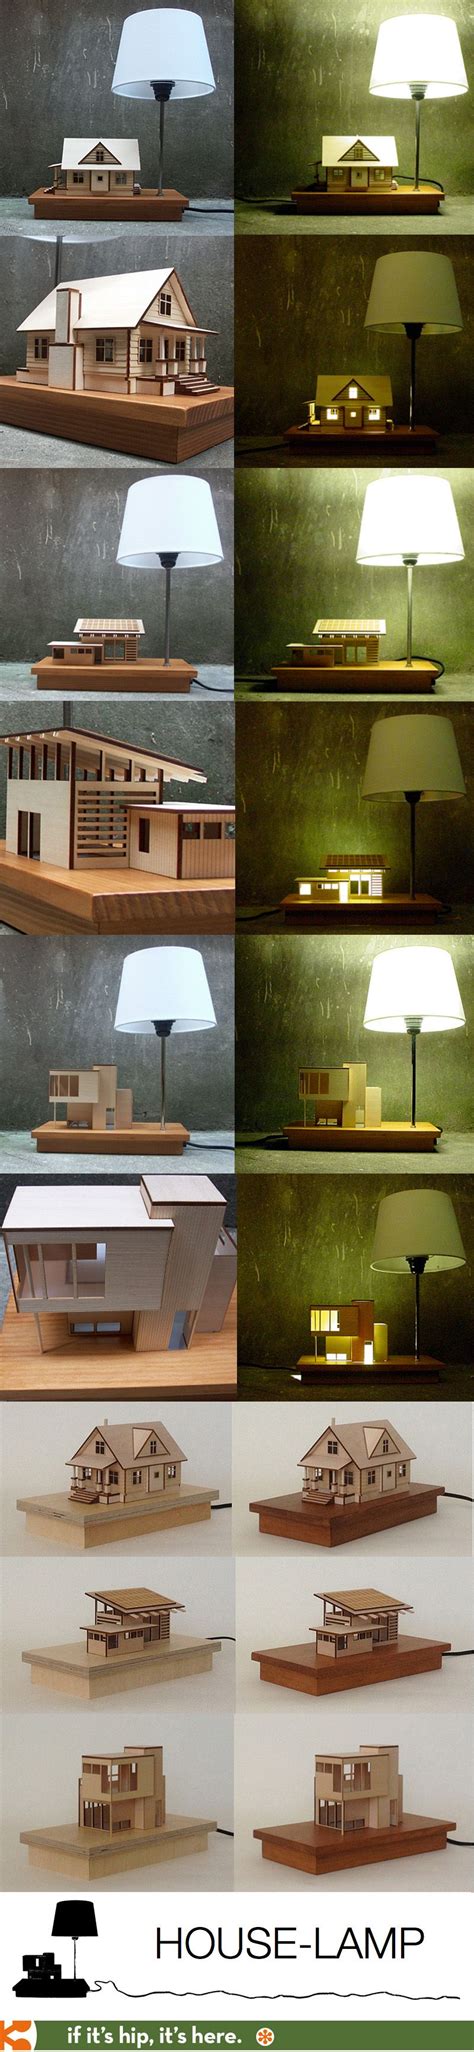 hip   house lamps  architect lauren daley house lamp decorative table